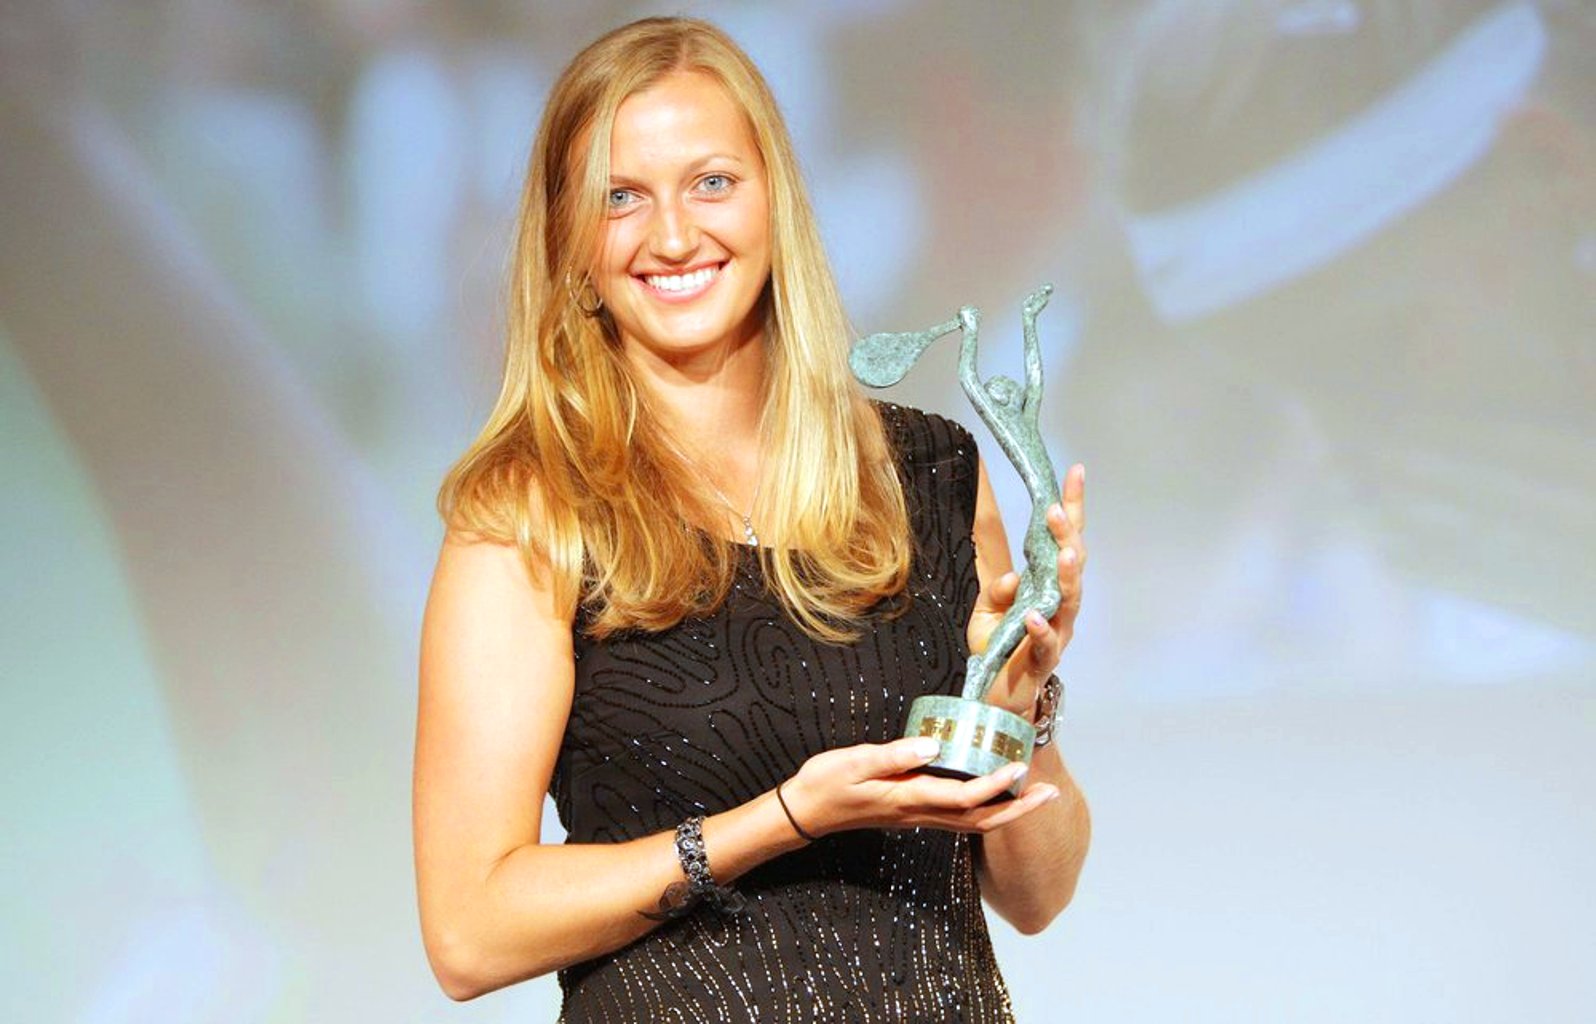  Petra Kvitova and trophy for best tenis player in last season